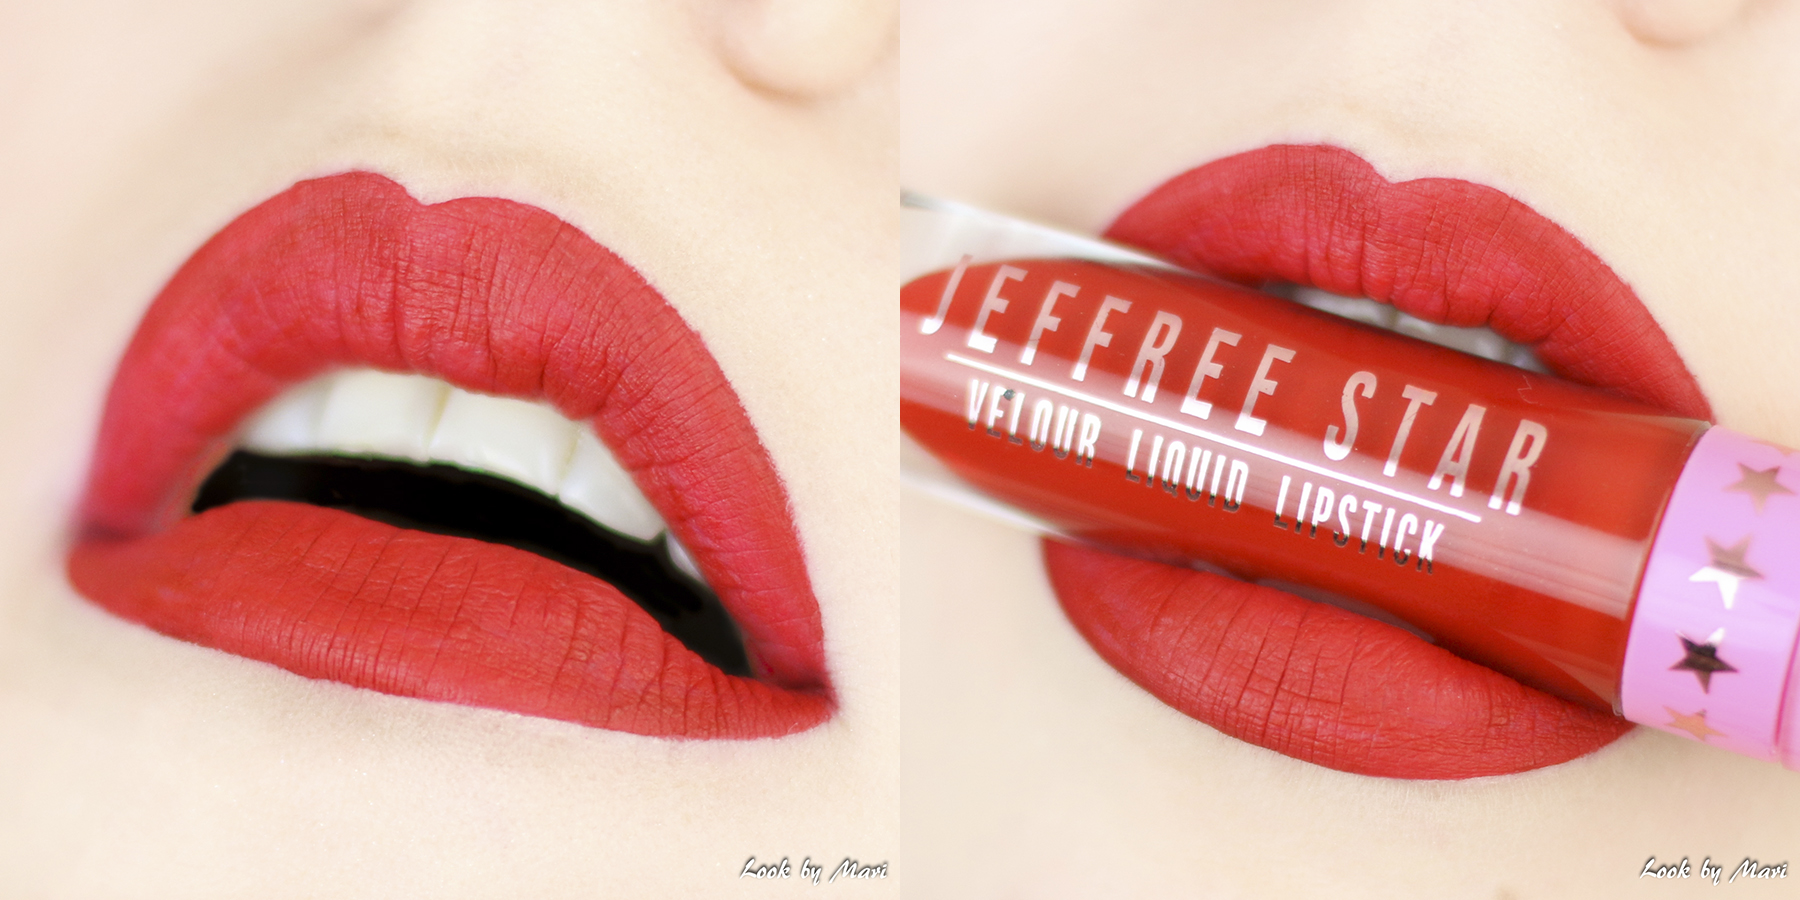 1 jeffree star cosmetics redrum swatch swatches review velour liquid lipstick blog